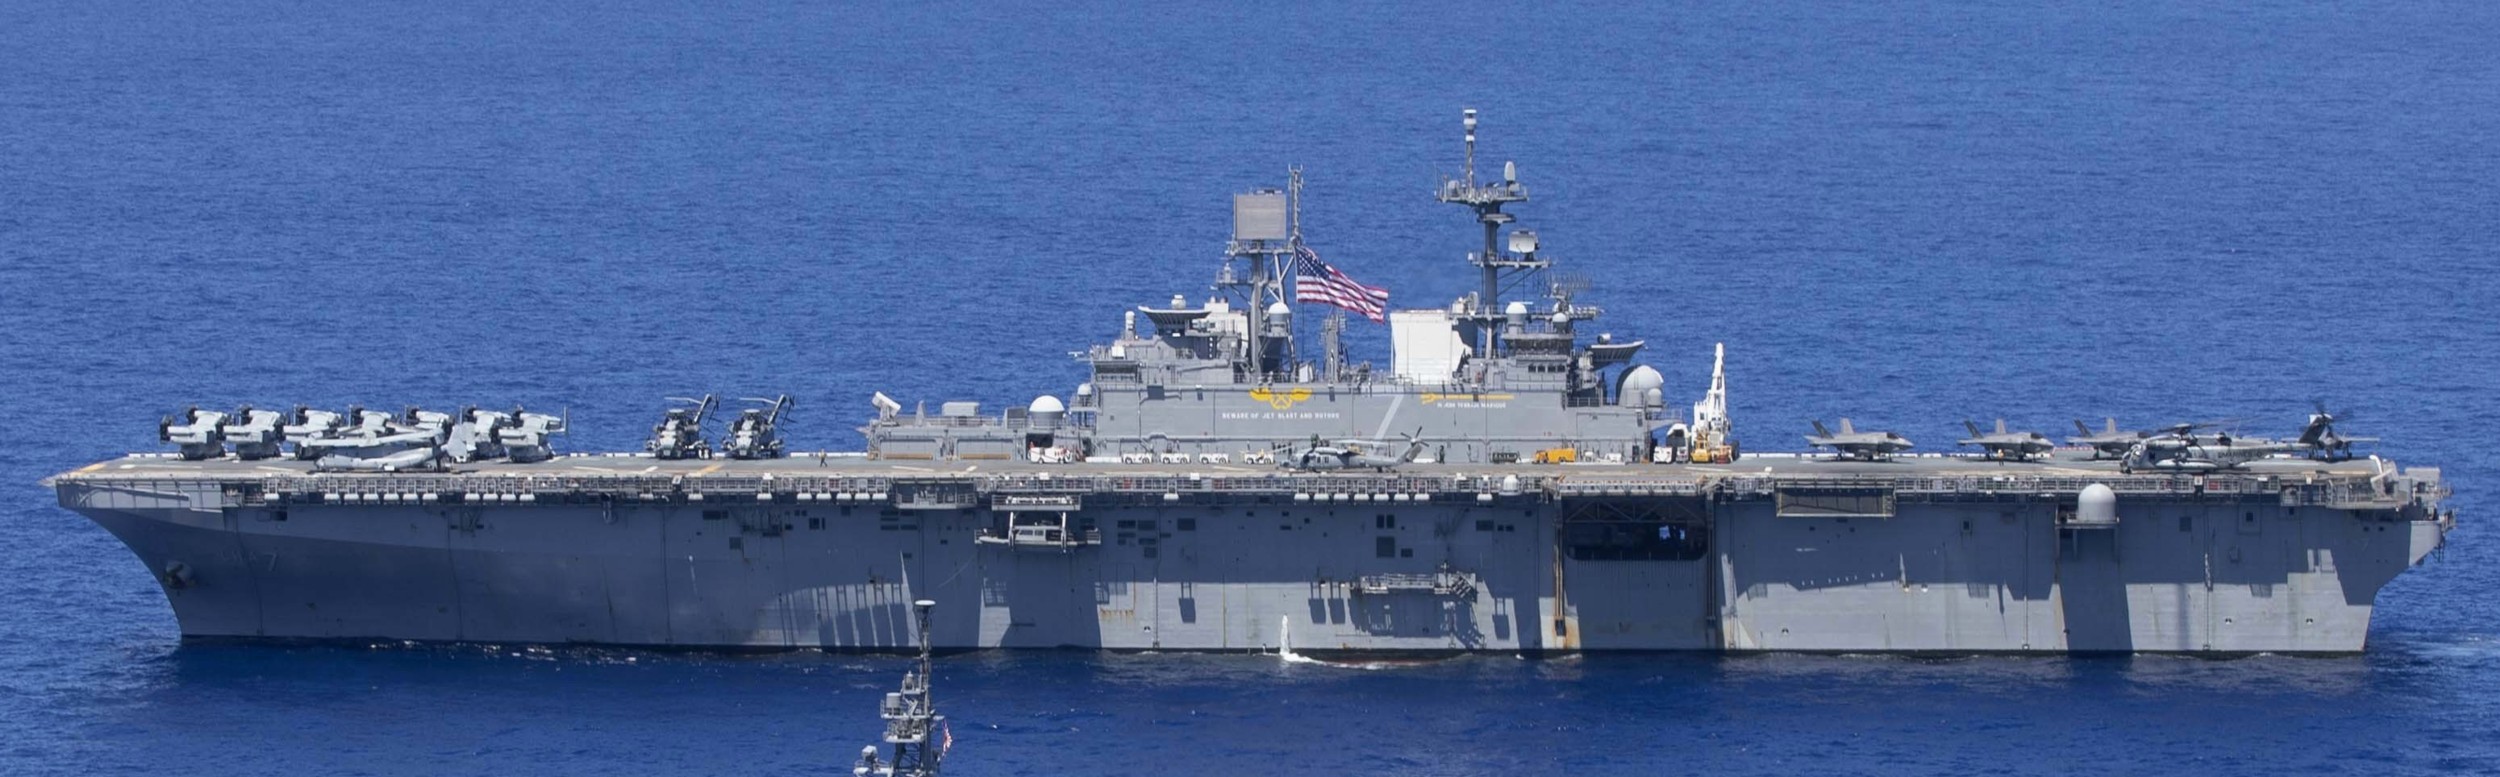 lha-7 uss tripoli america class amphibious assault ship landing us navy marines vmm-262 philippine sea 64